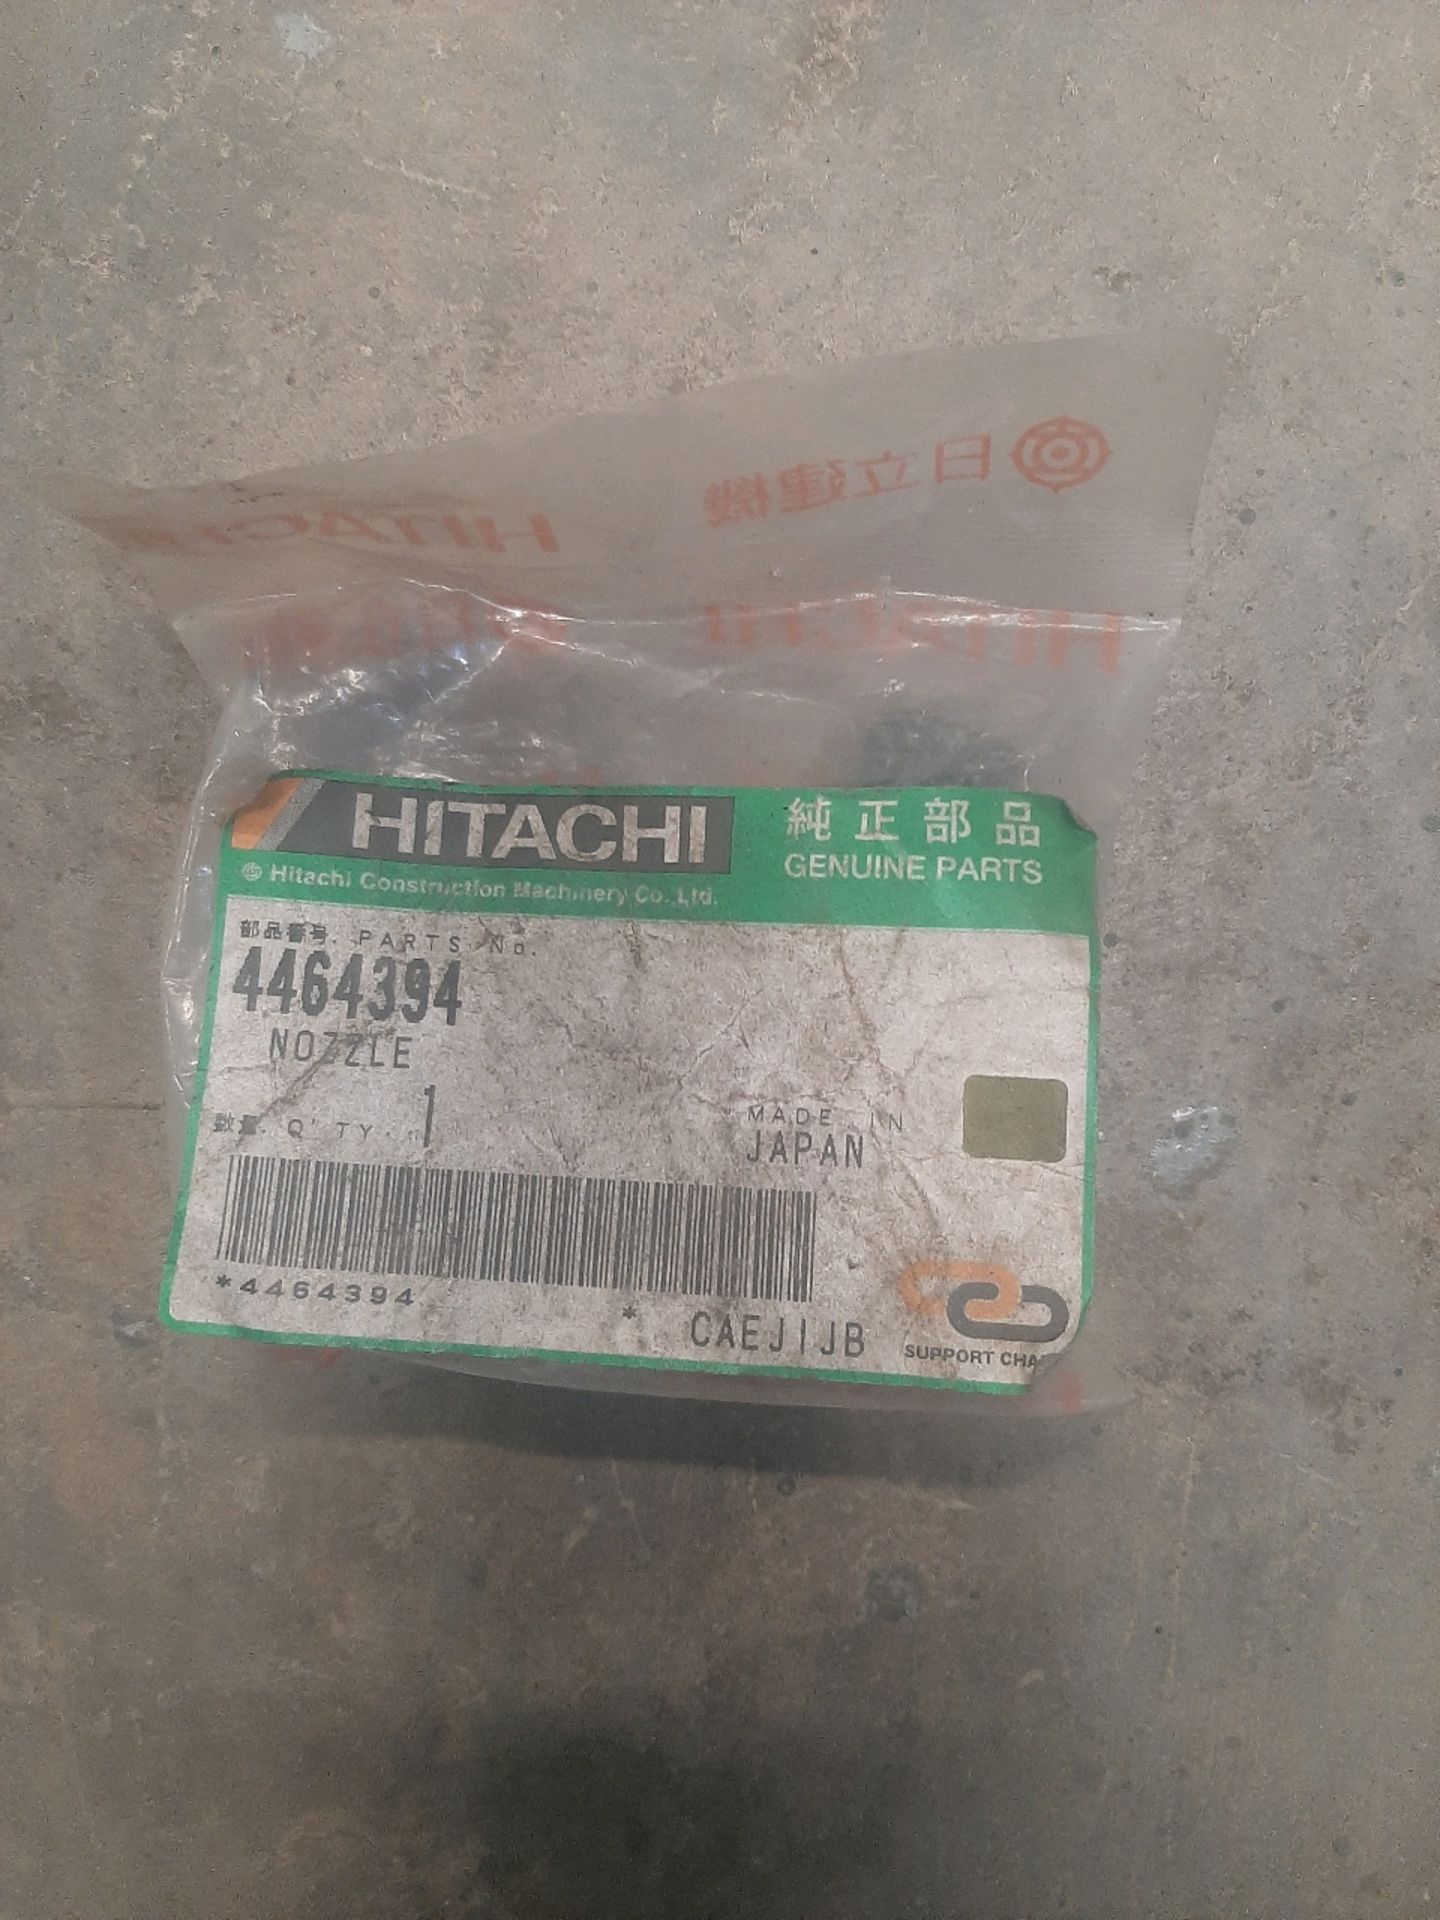 HITACHI MINING ZX870 PARTS - Image 97 of 115